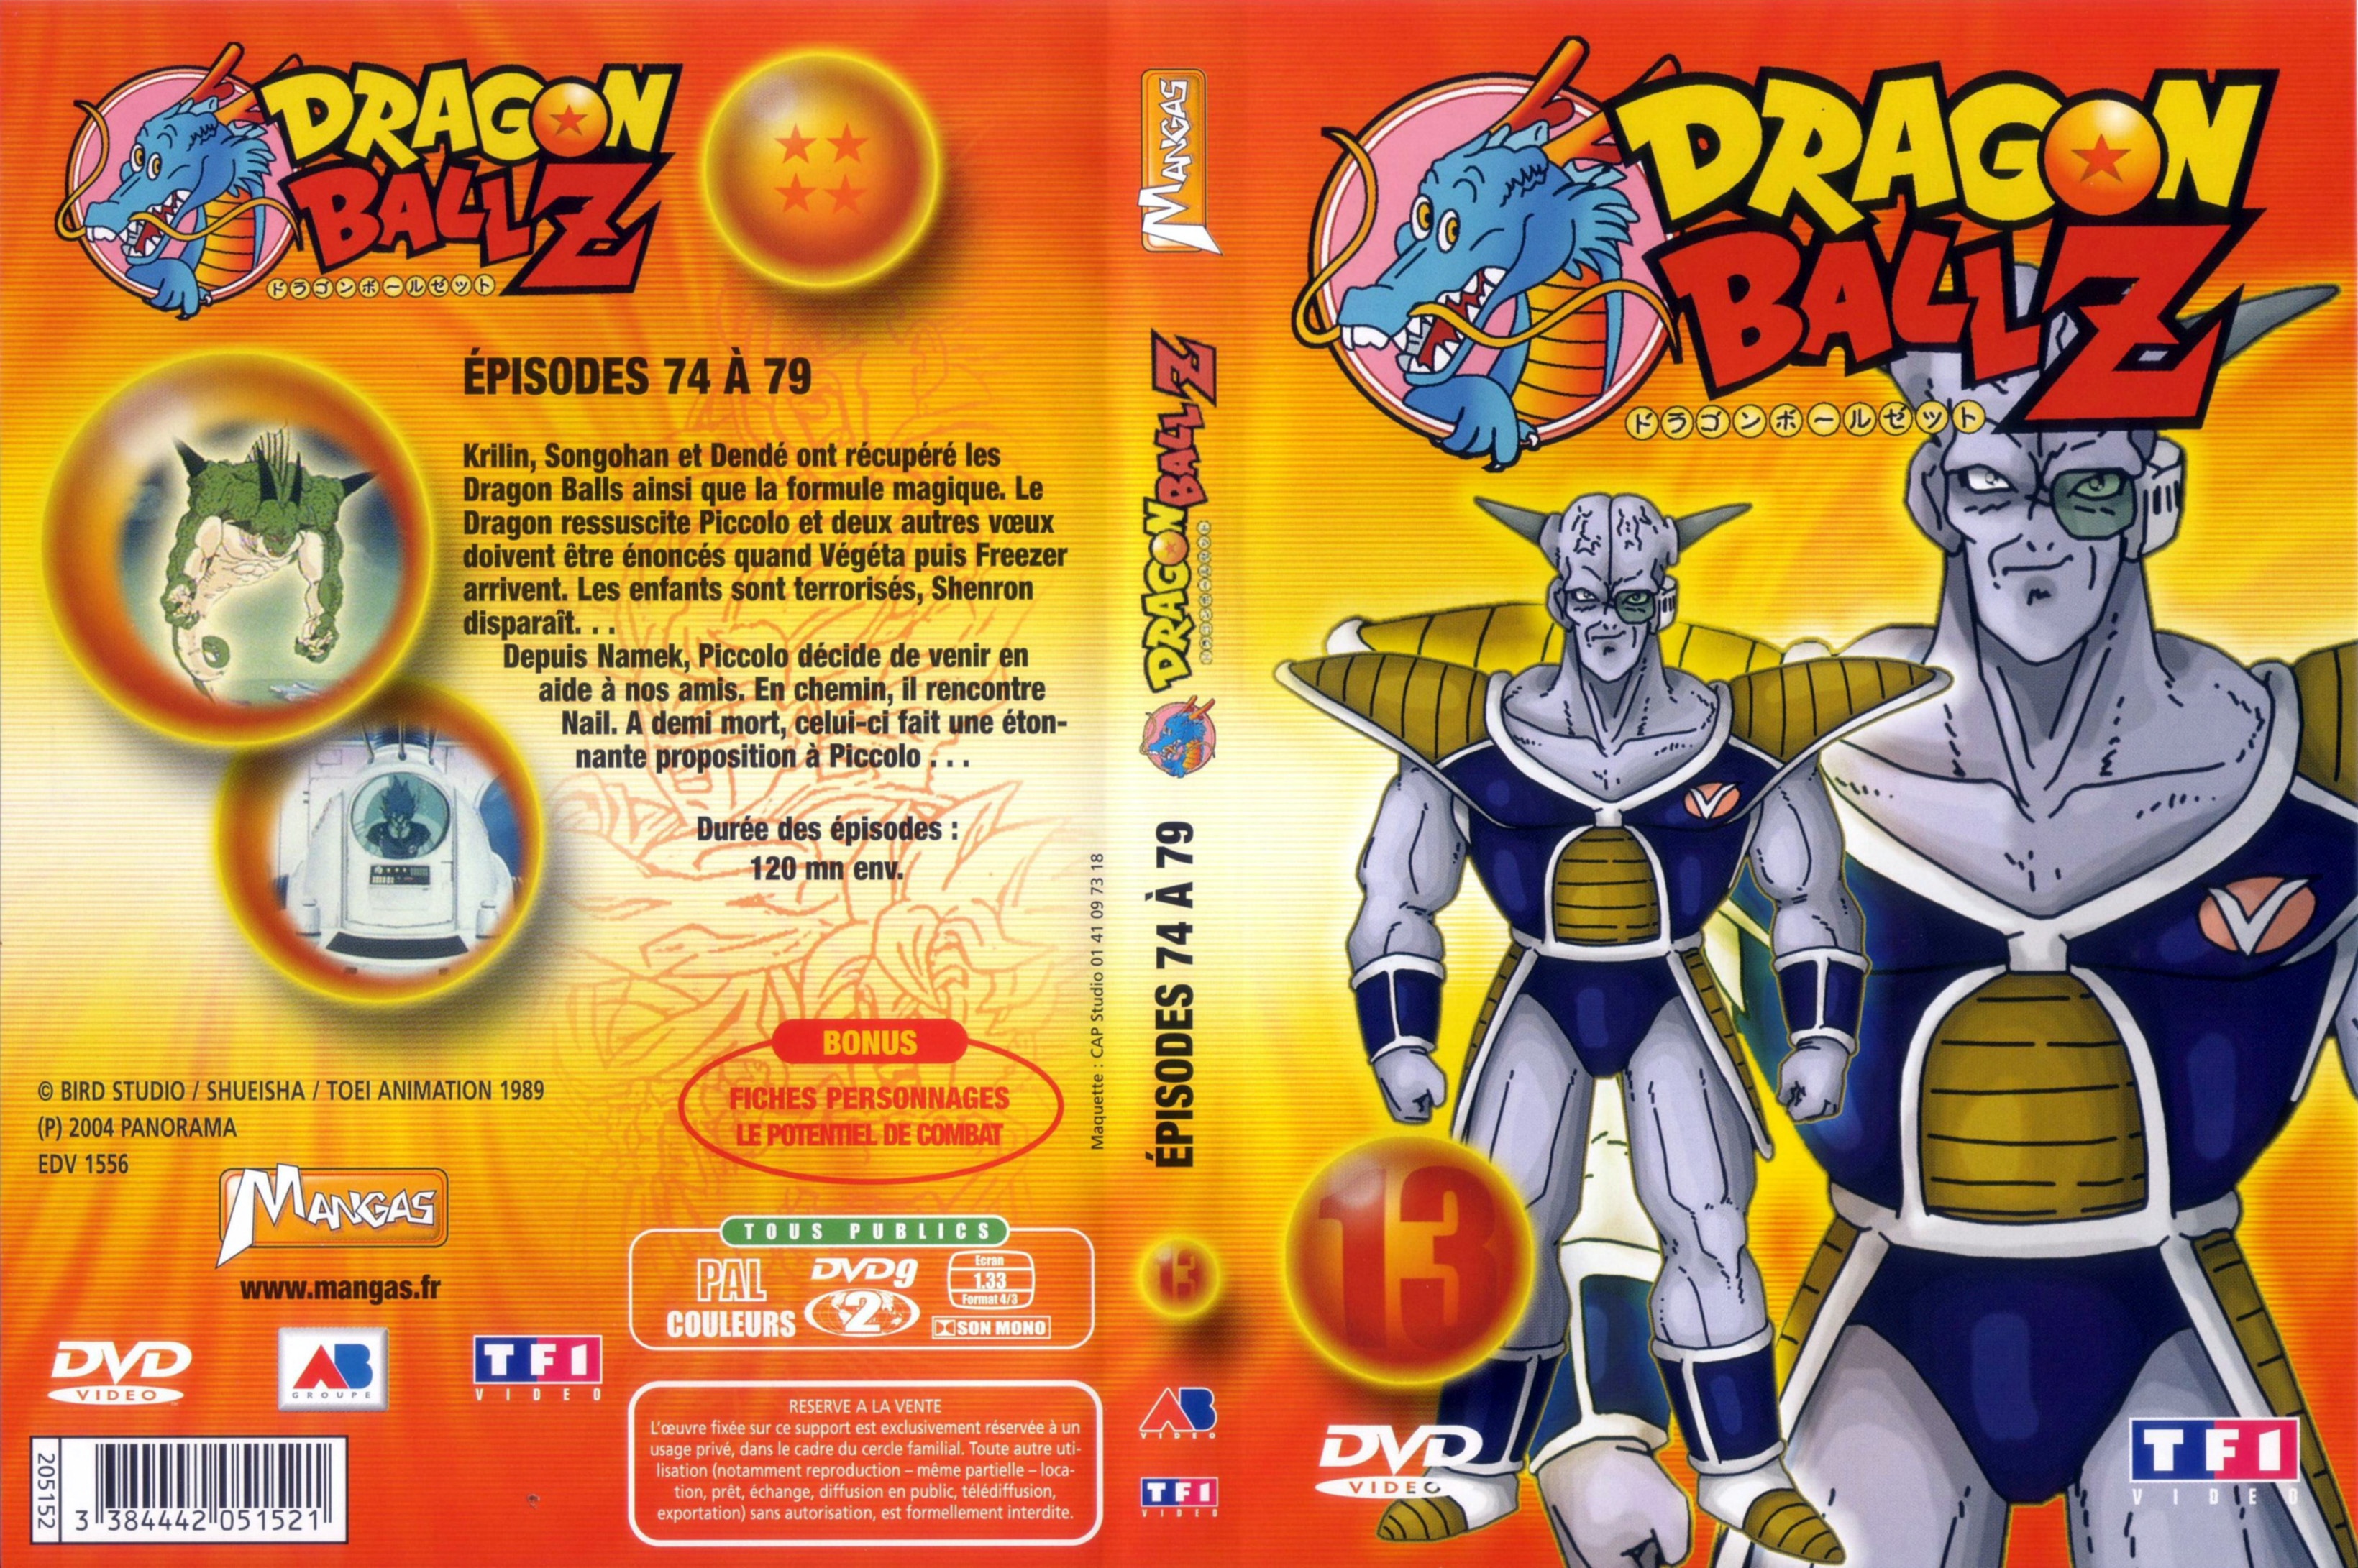 Jaquette DVD Dragon ball Z vol 13